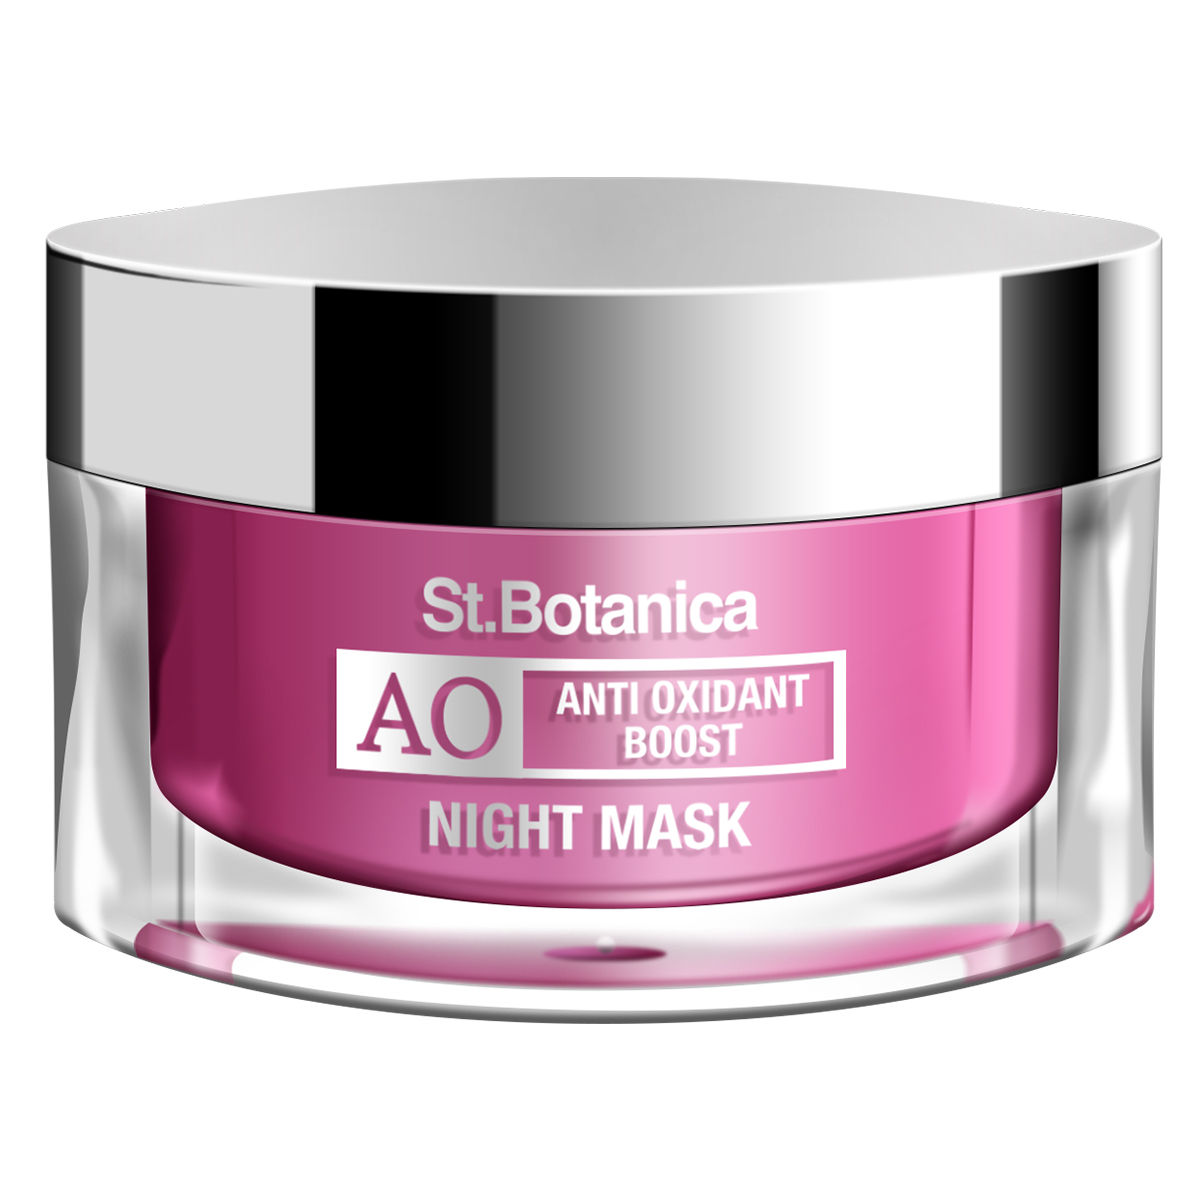 Buy St.Botanica Anti Oxidant Boost Night Mask (50 g) - Purplle